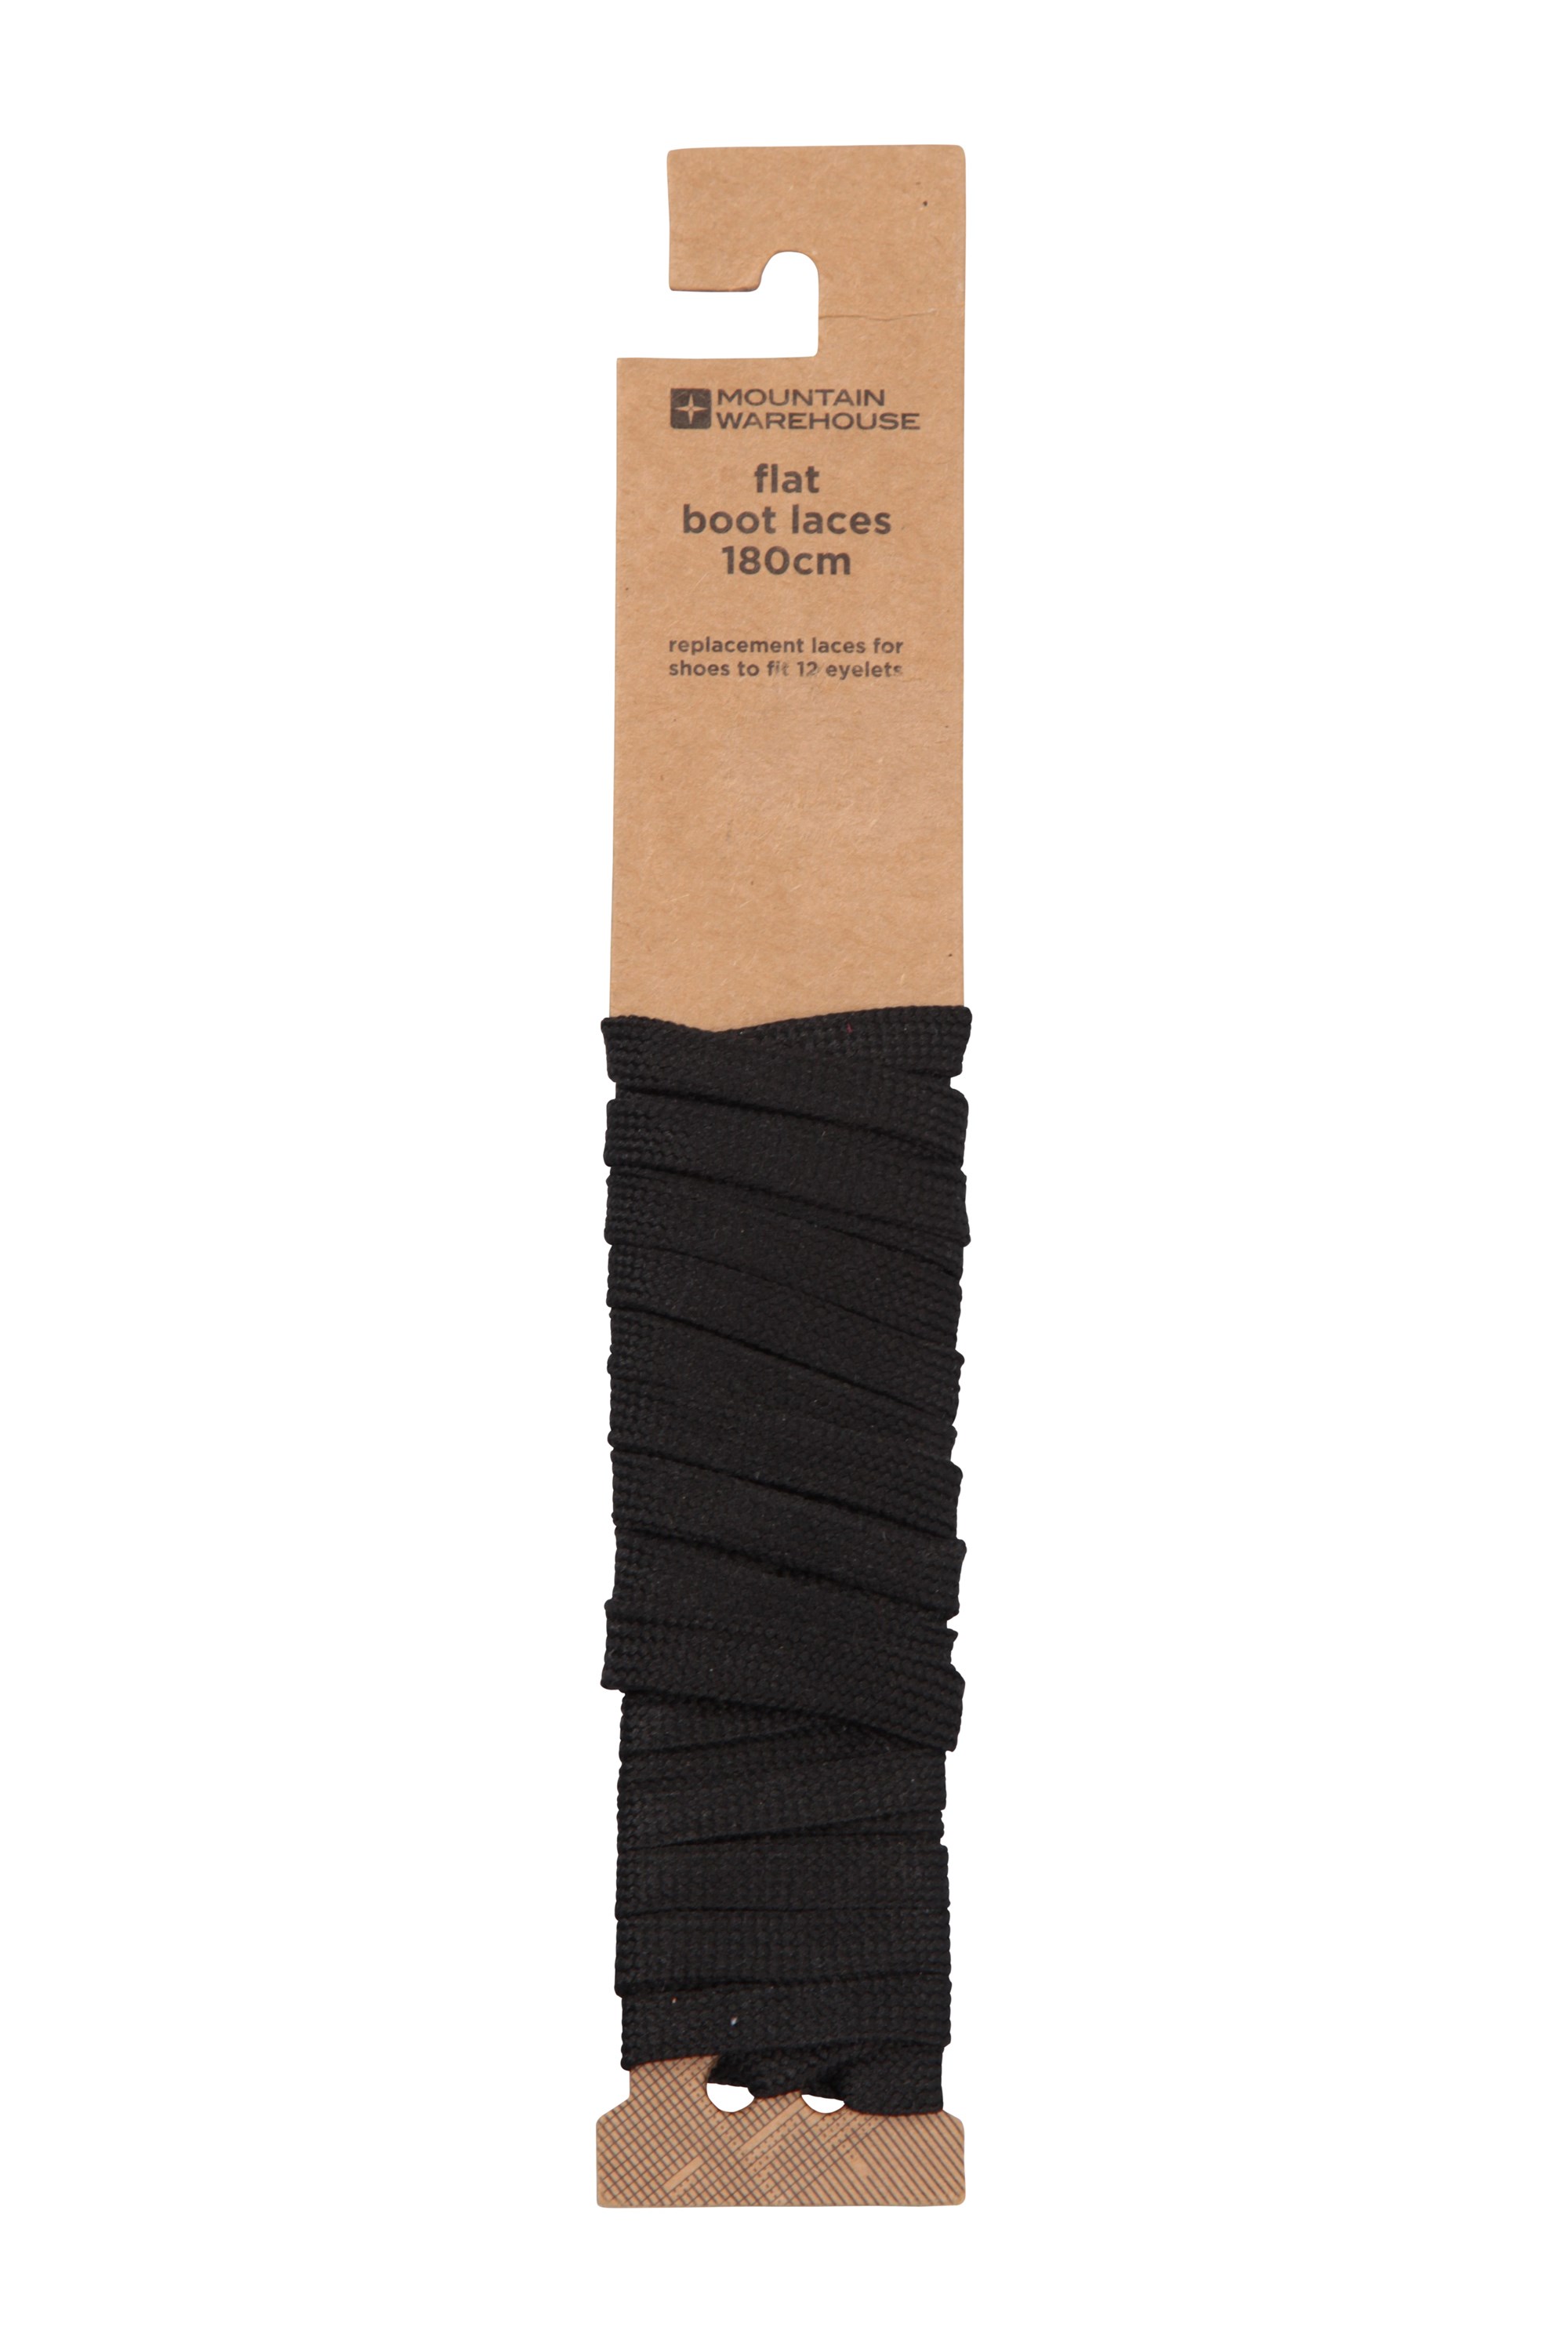 Mountain Warehouse Flat Boot Laces 180cm Black